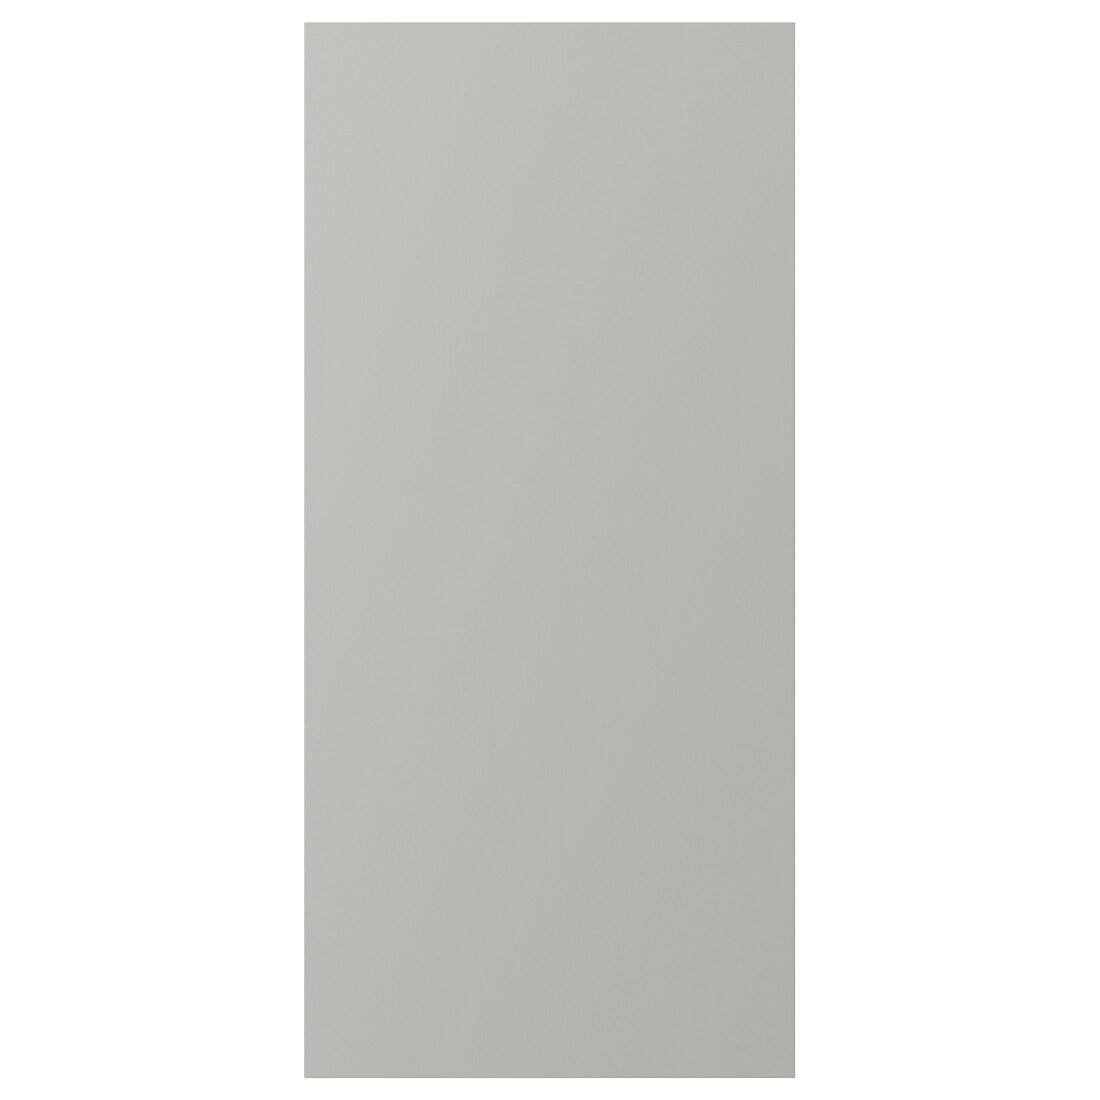 IKEA LERHYTTAN ЛЕРХЮТТАН Накладная панель, светло-серый, 39x85 cм 10352351 103.523.51